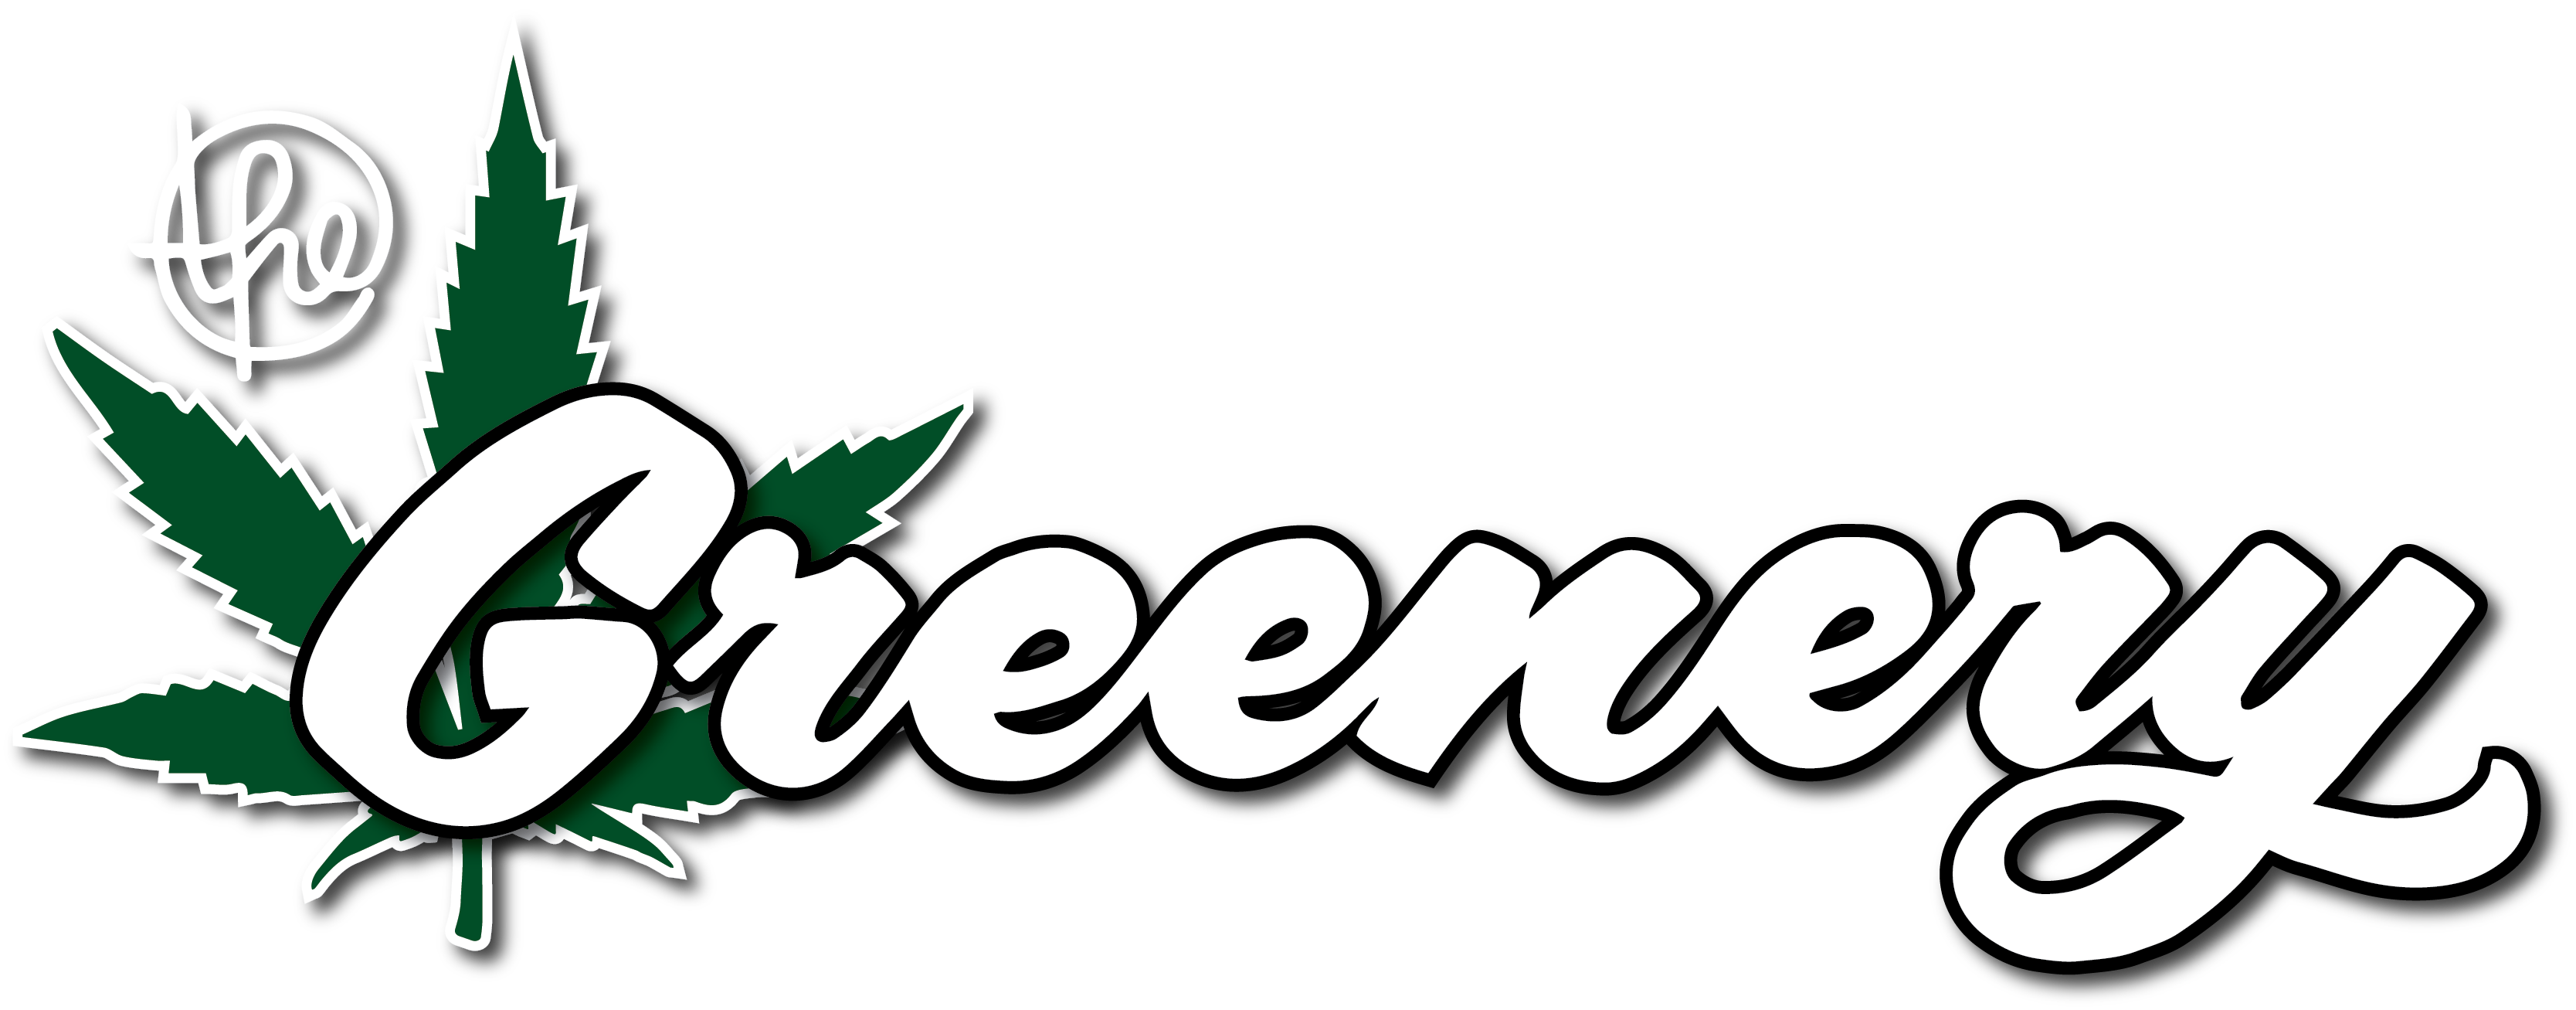 The Greenery Hash Factory Cannabis Brand Logo